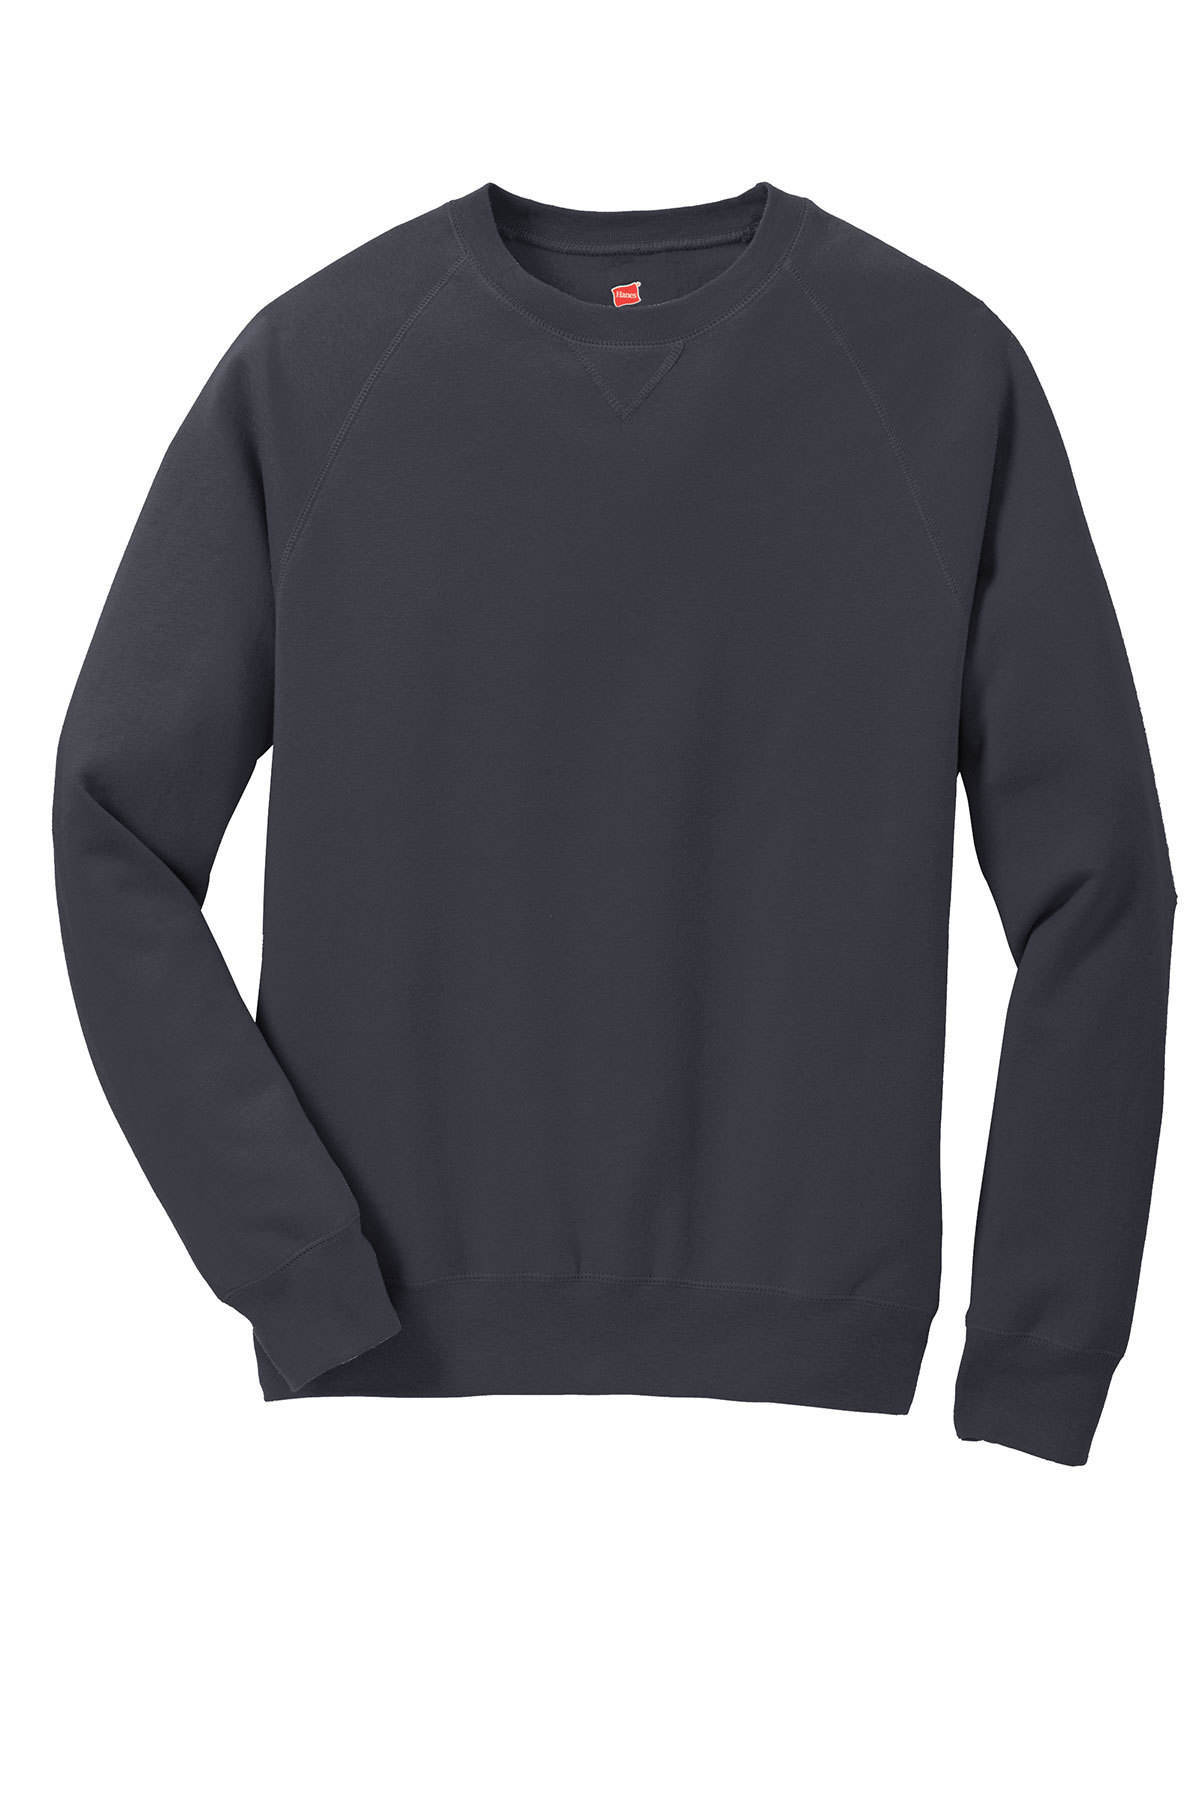 Hanes Nano Crewneck Sweatshirt | Product | SanMar